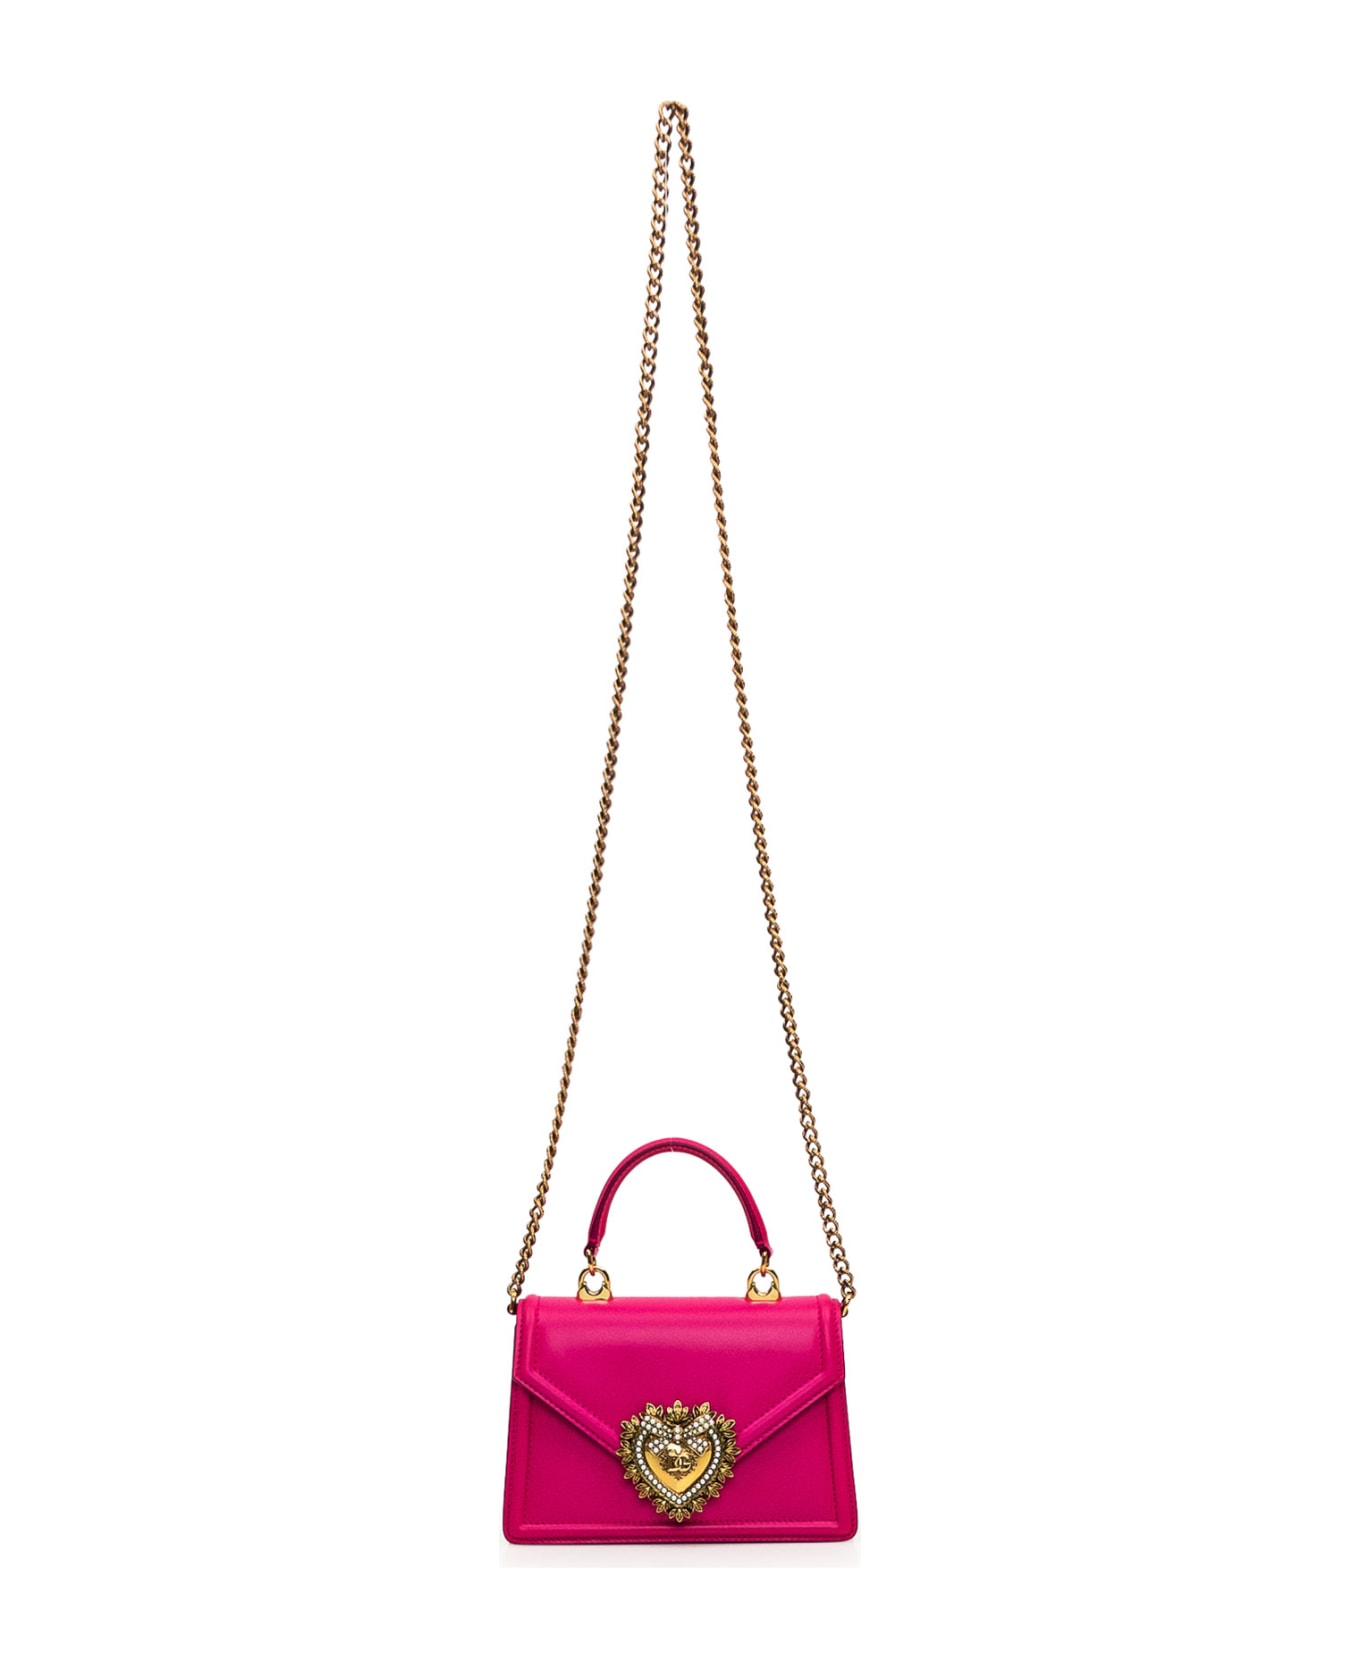 Dolce & Gabbana Devotion Bag - Rosa shocking